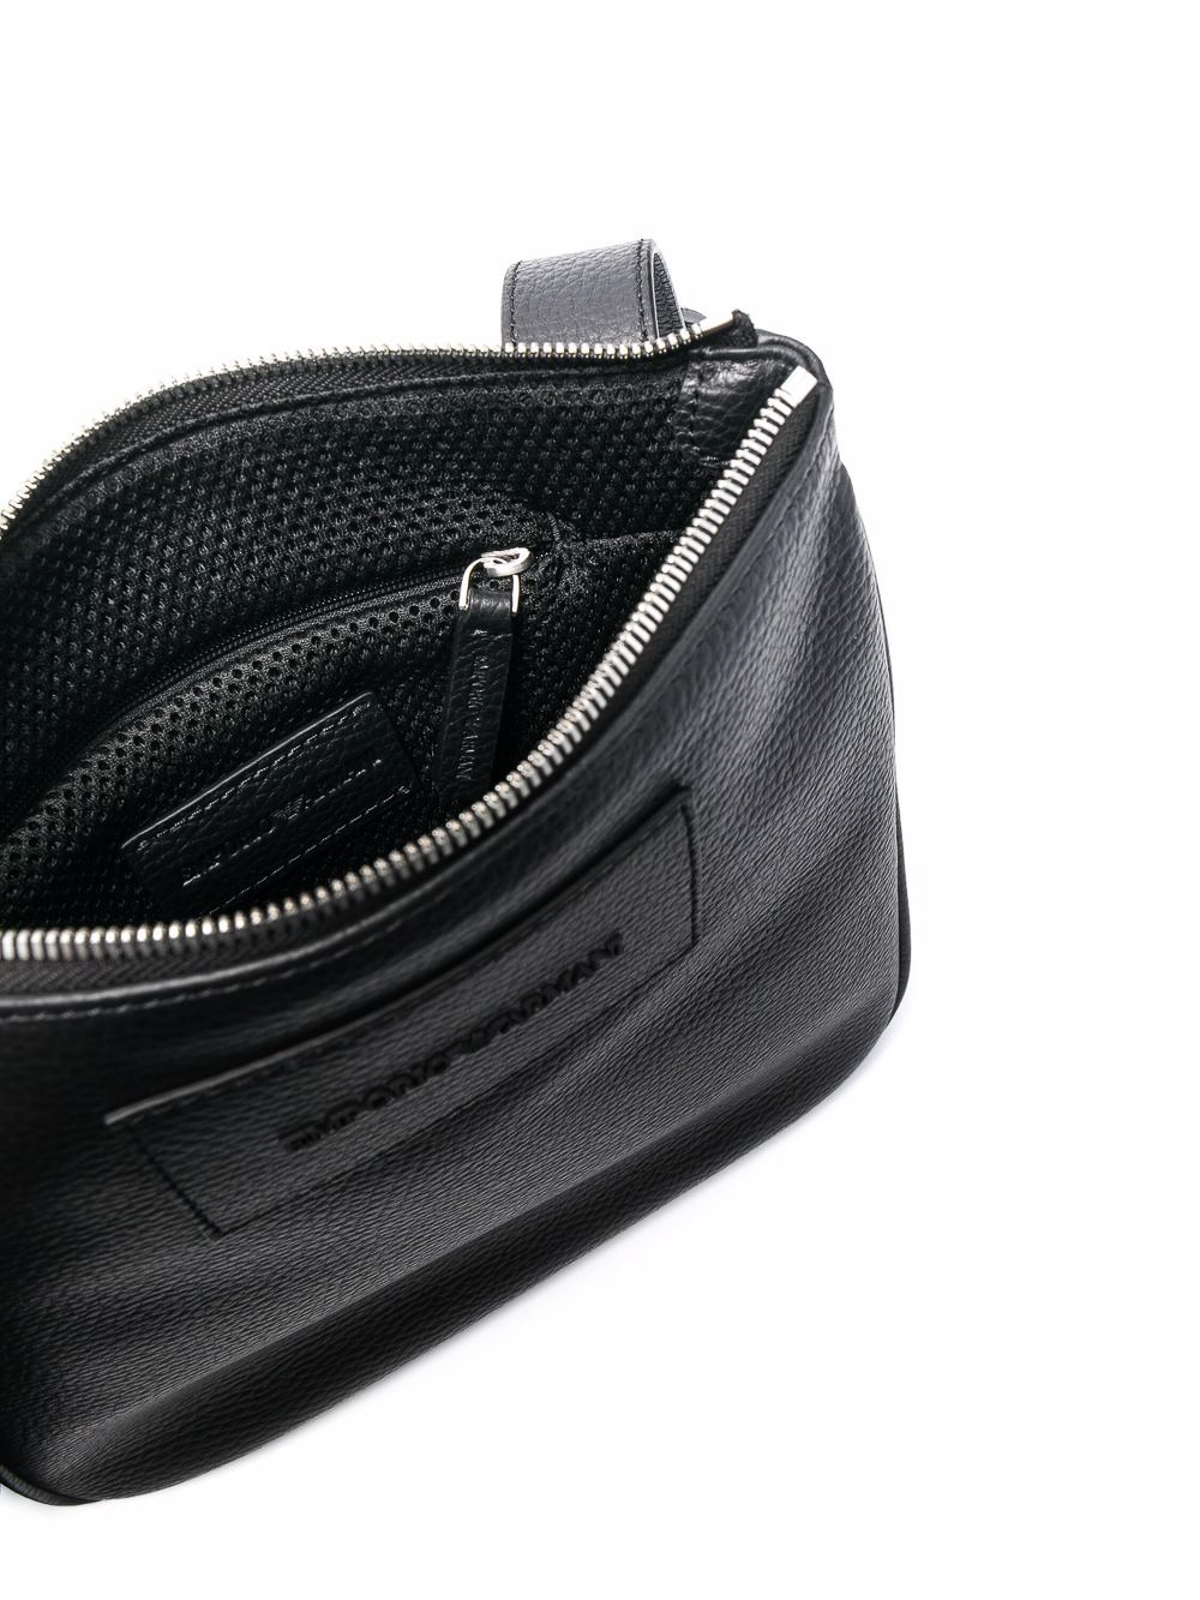 Emporio Armani Small Leather Embossed Cross-Body Bag